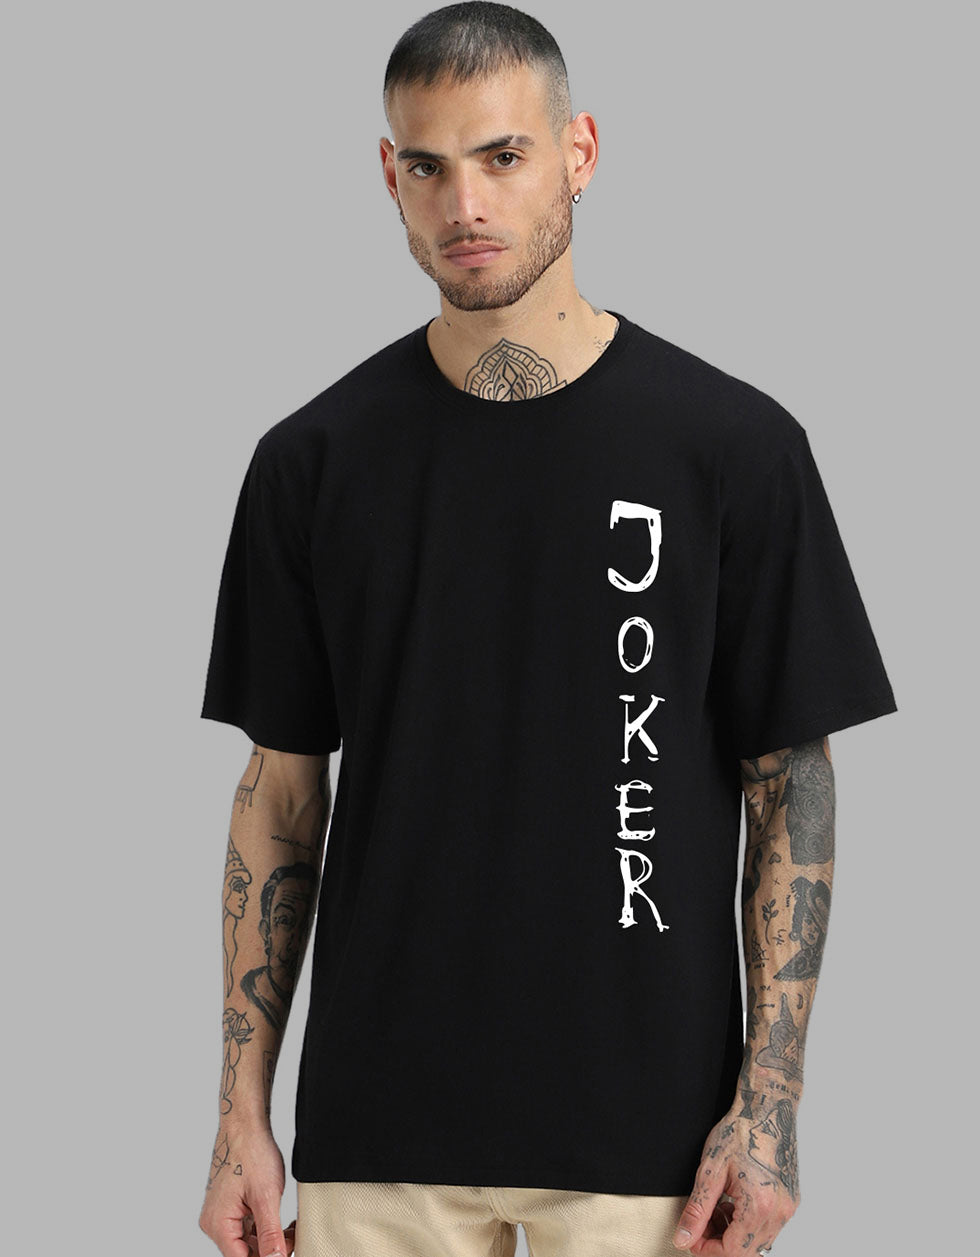 Joker Oversized Black Back Graphic Printed Tshirt